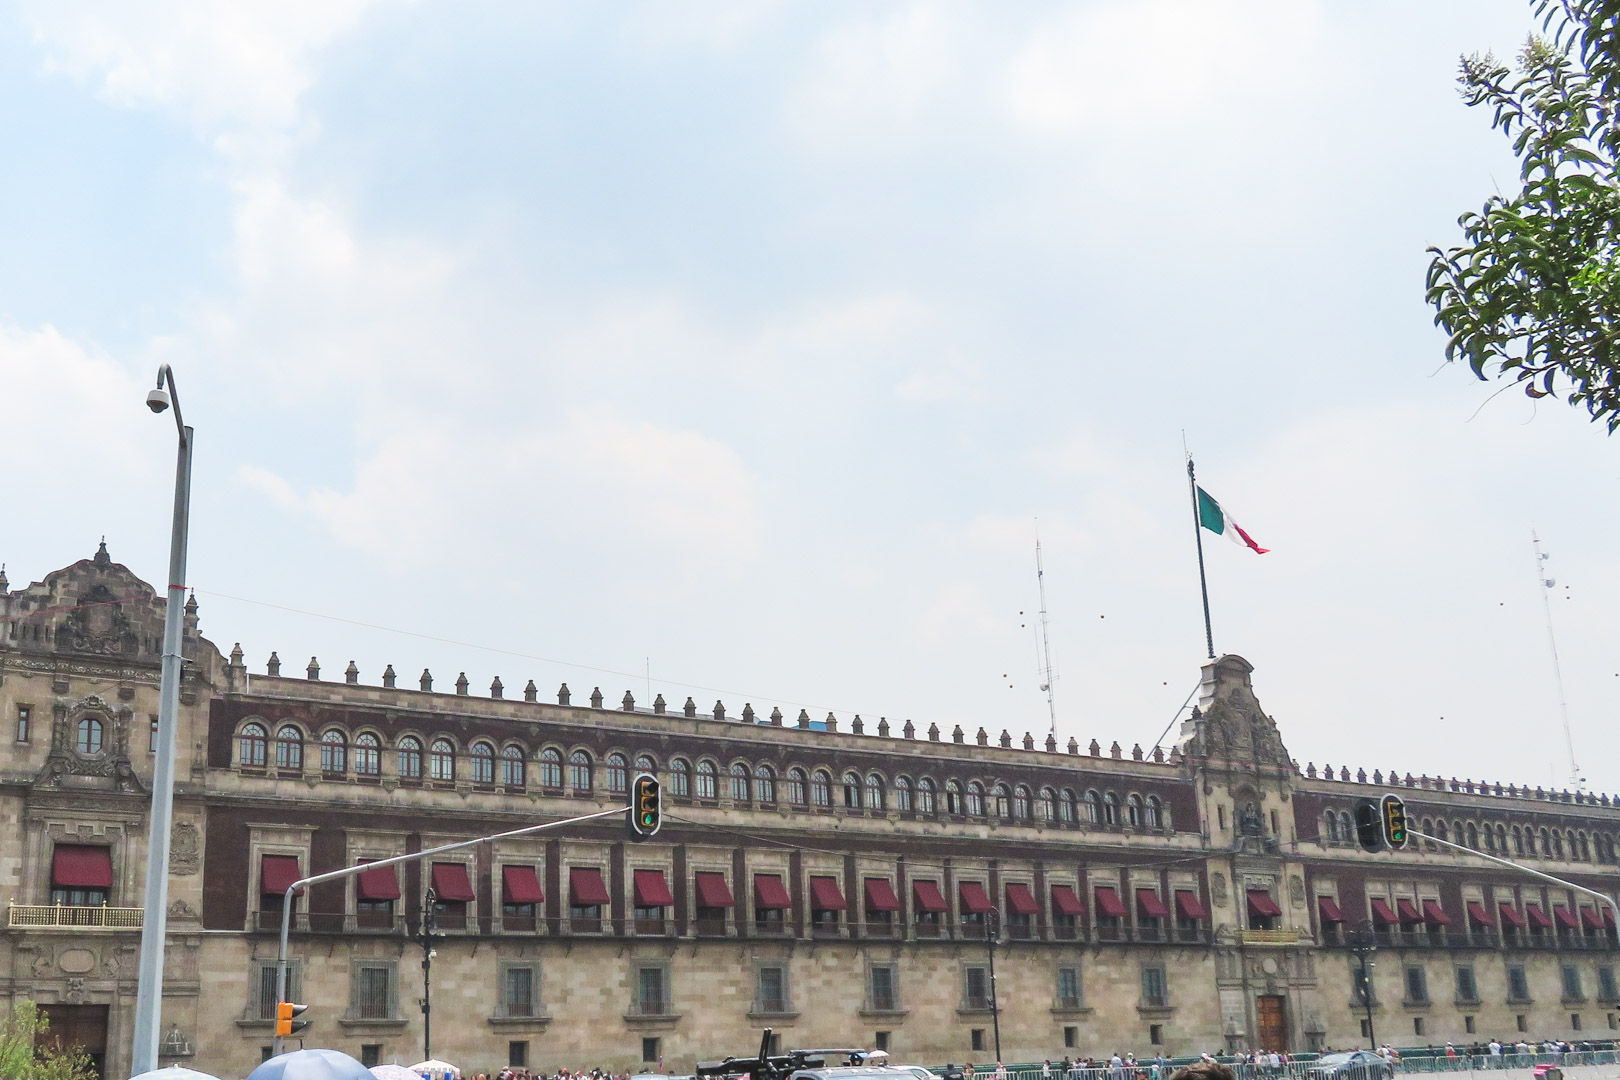 Mexico City Palacio Nacional